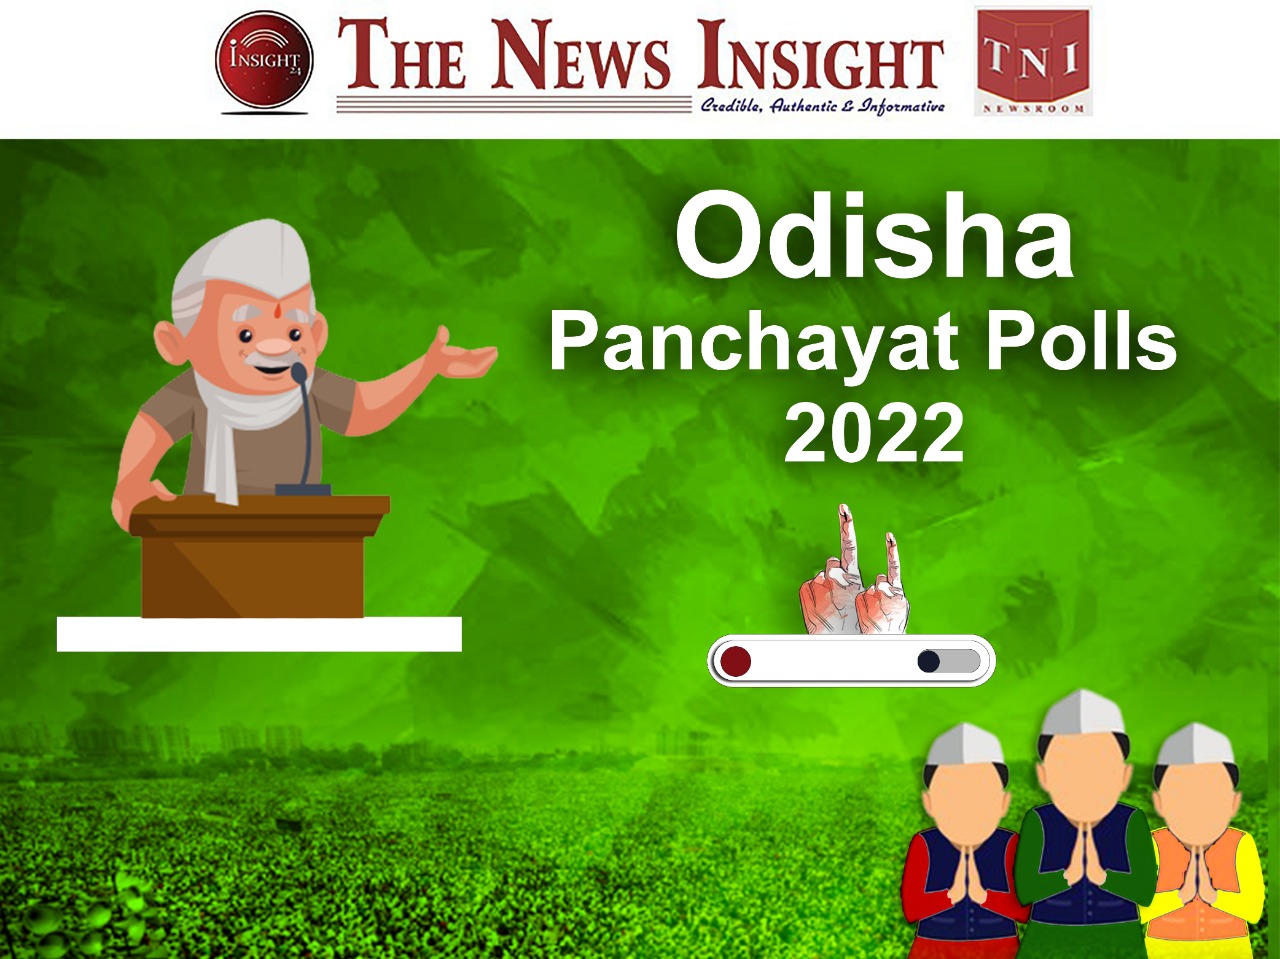 odisha-panchayat-polls